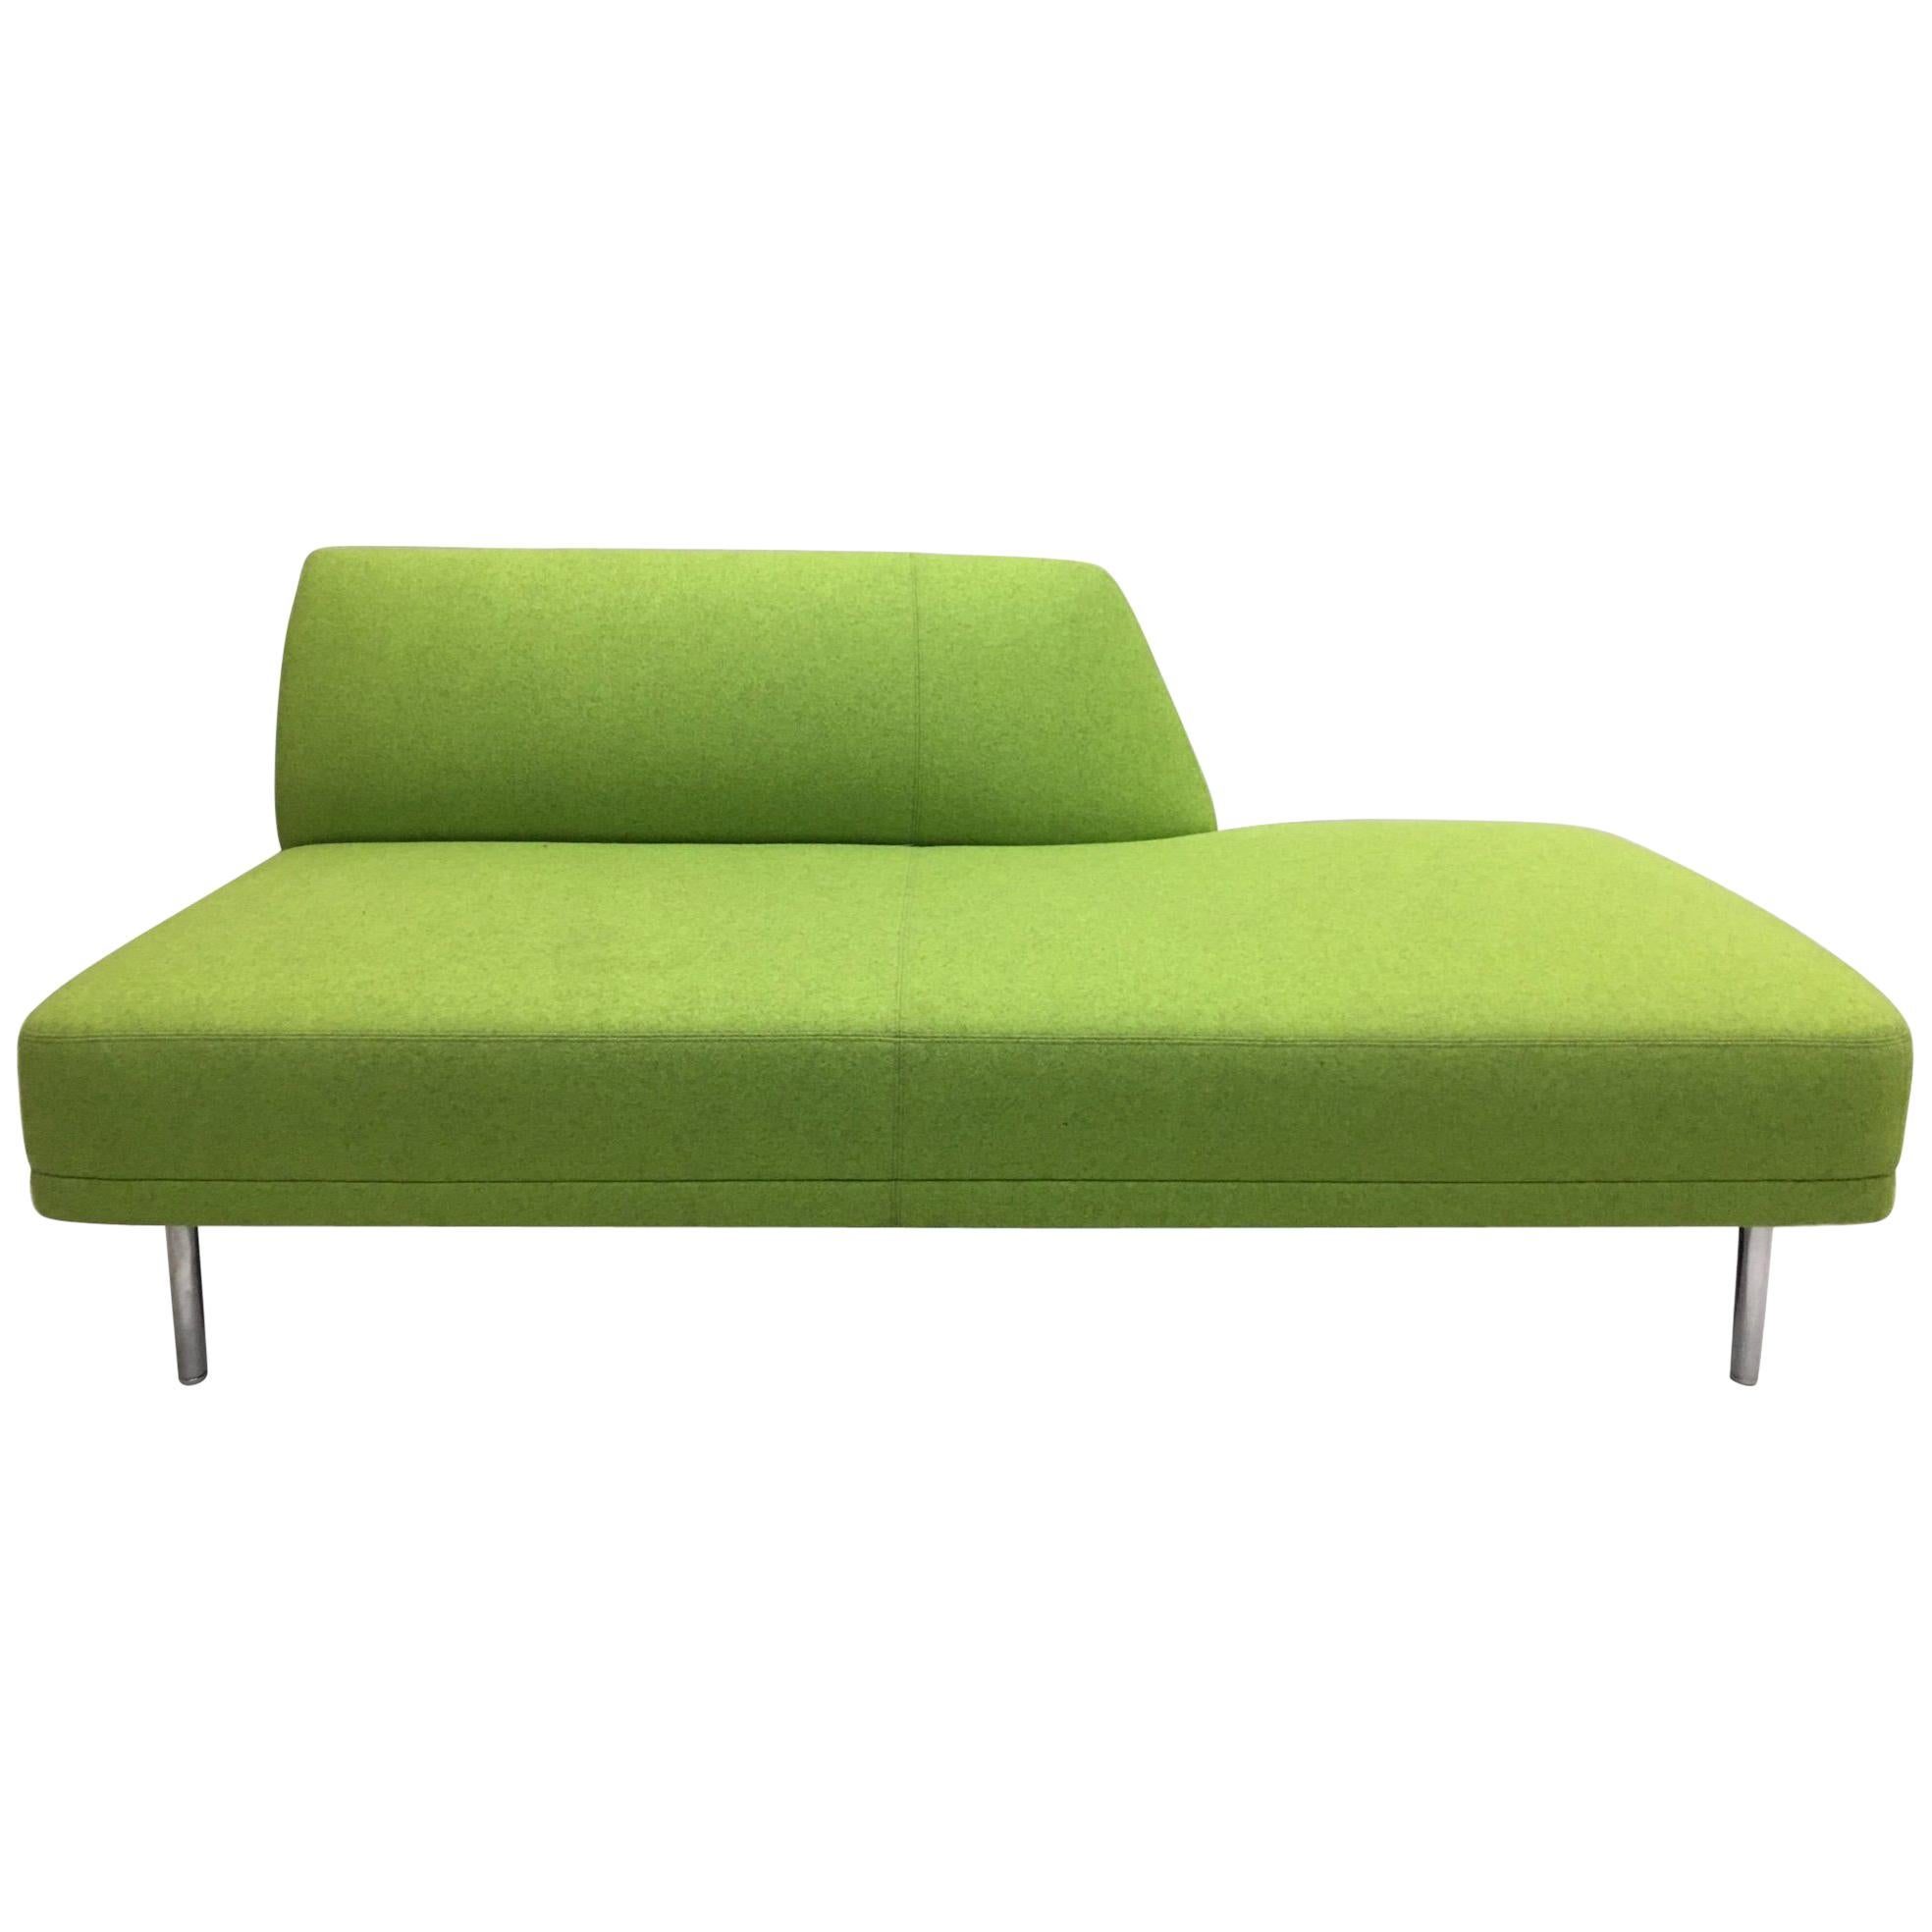 Italian Mid-Century Modern Style Moss Green Sofa, Love Seat, Marco Zanuso style For Sale